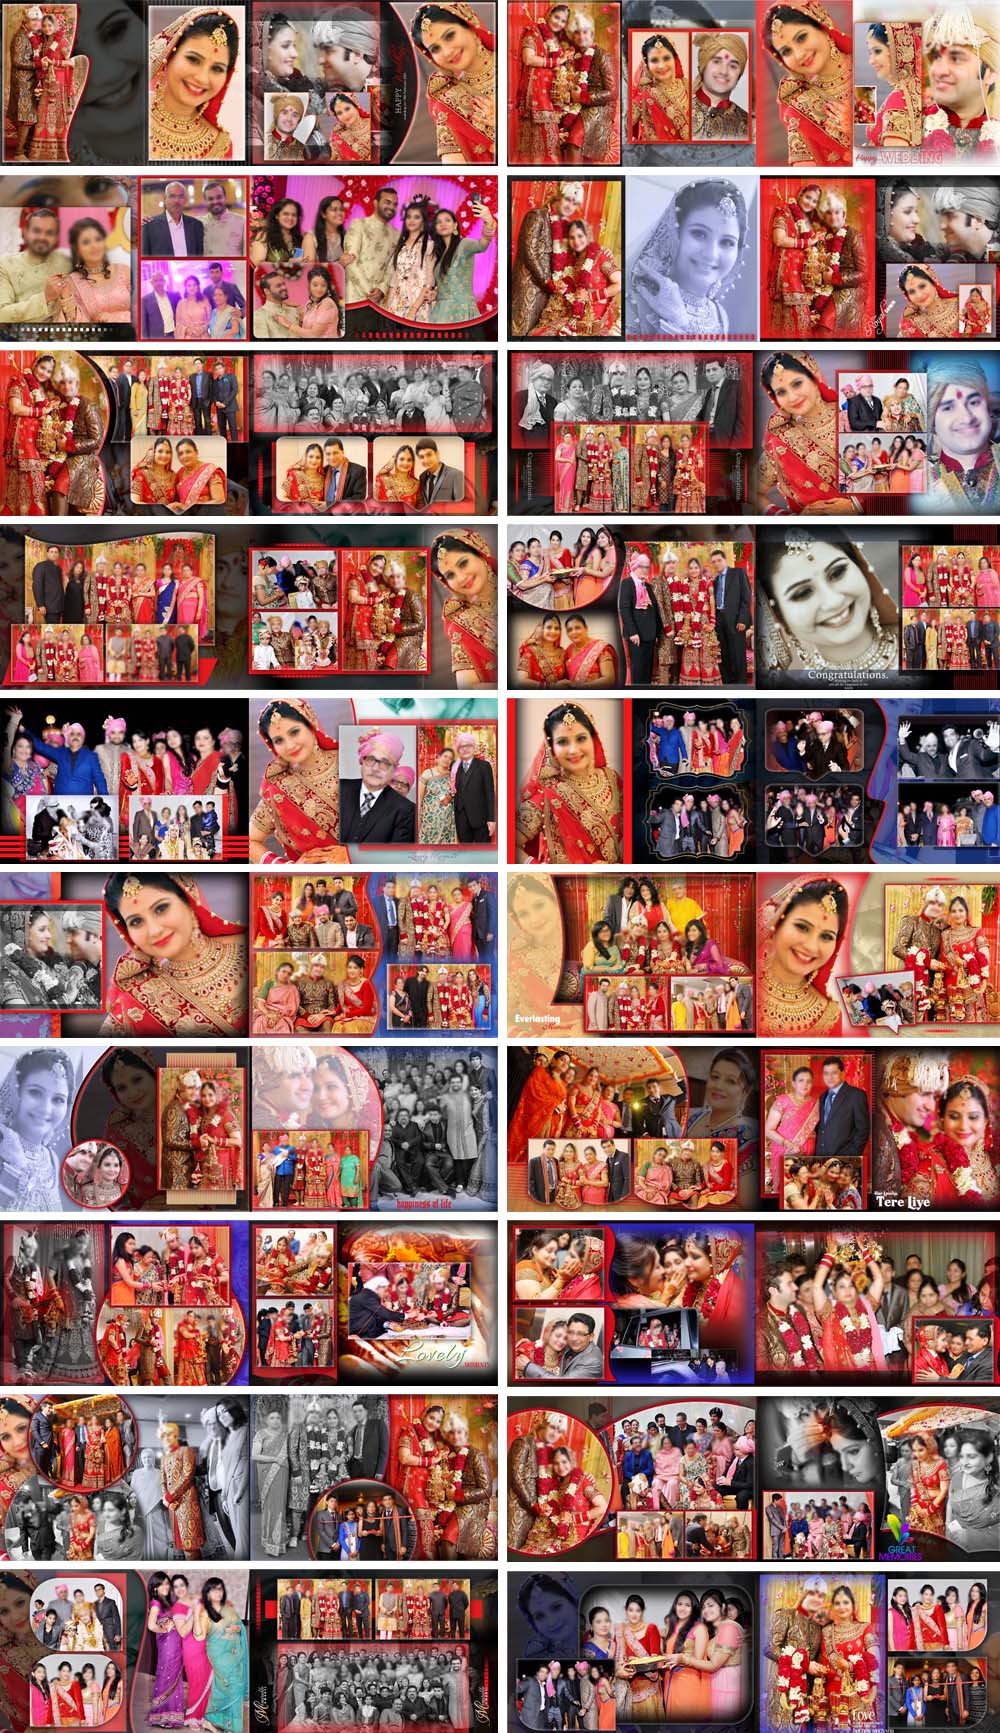 Indian Wedding Album Design 12x36 PSD